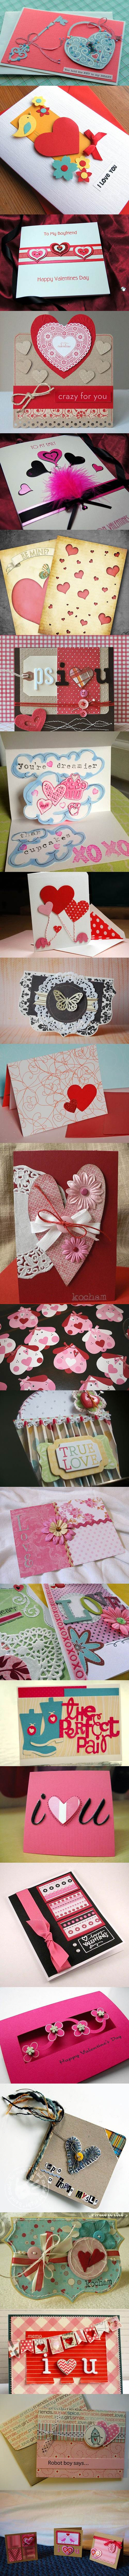 25 Valentines Day Card DIY Ideas 2